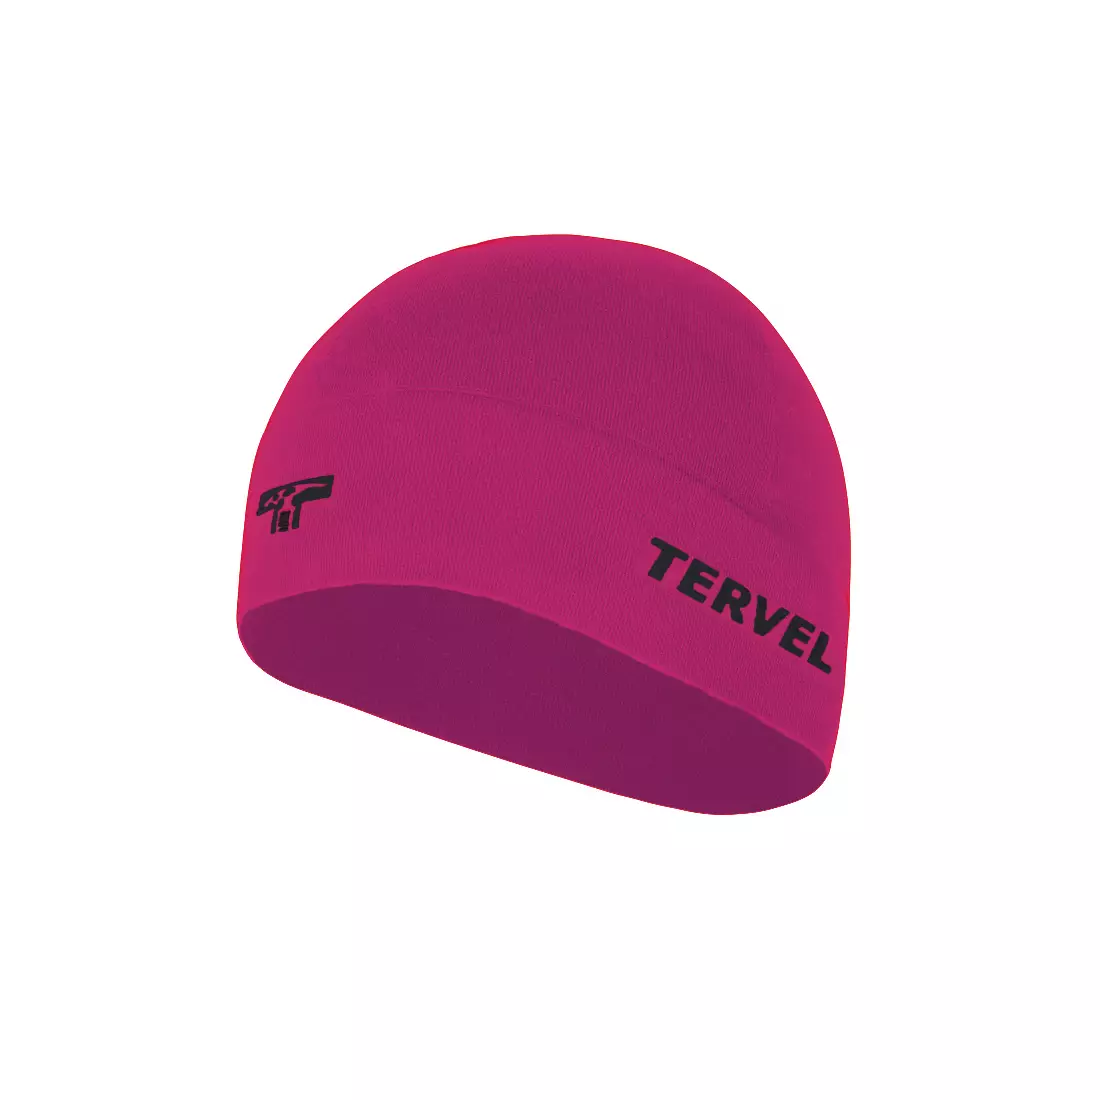 TERVEL 7001 - COMFORTLINE - Trainingskappe, Farbe: Pink, Größe: Universal